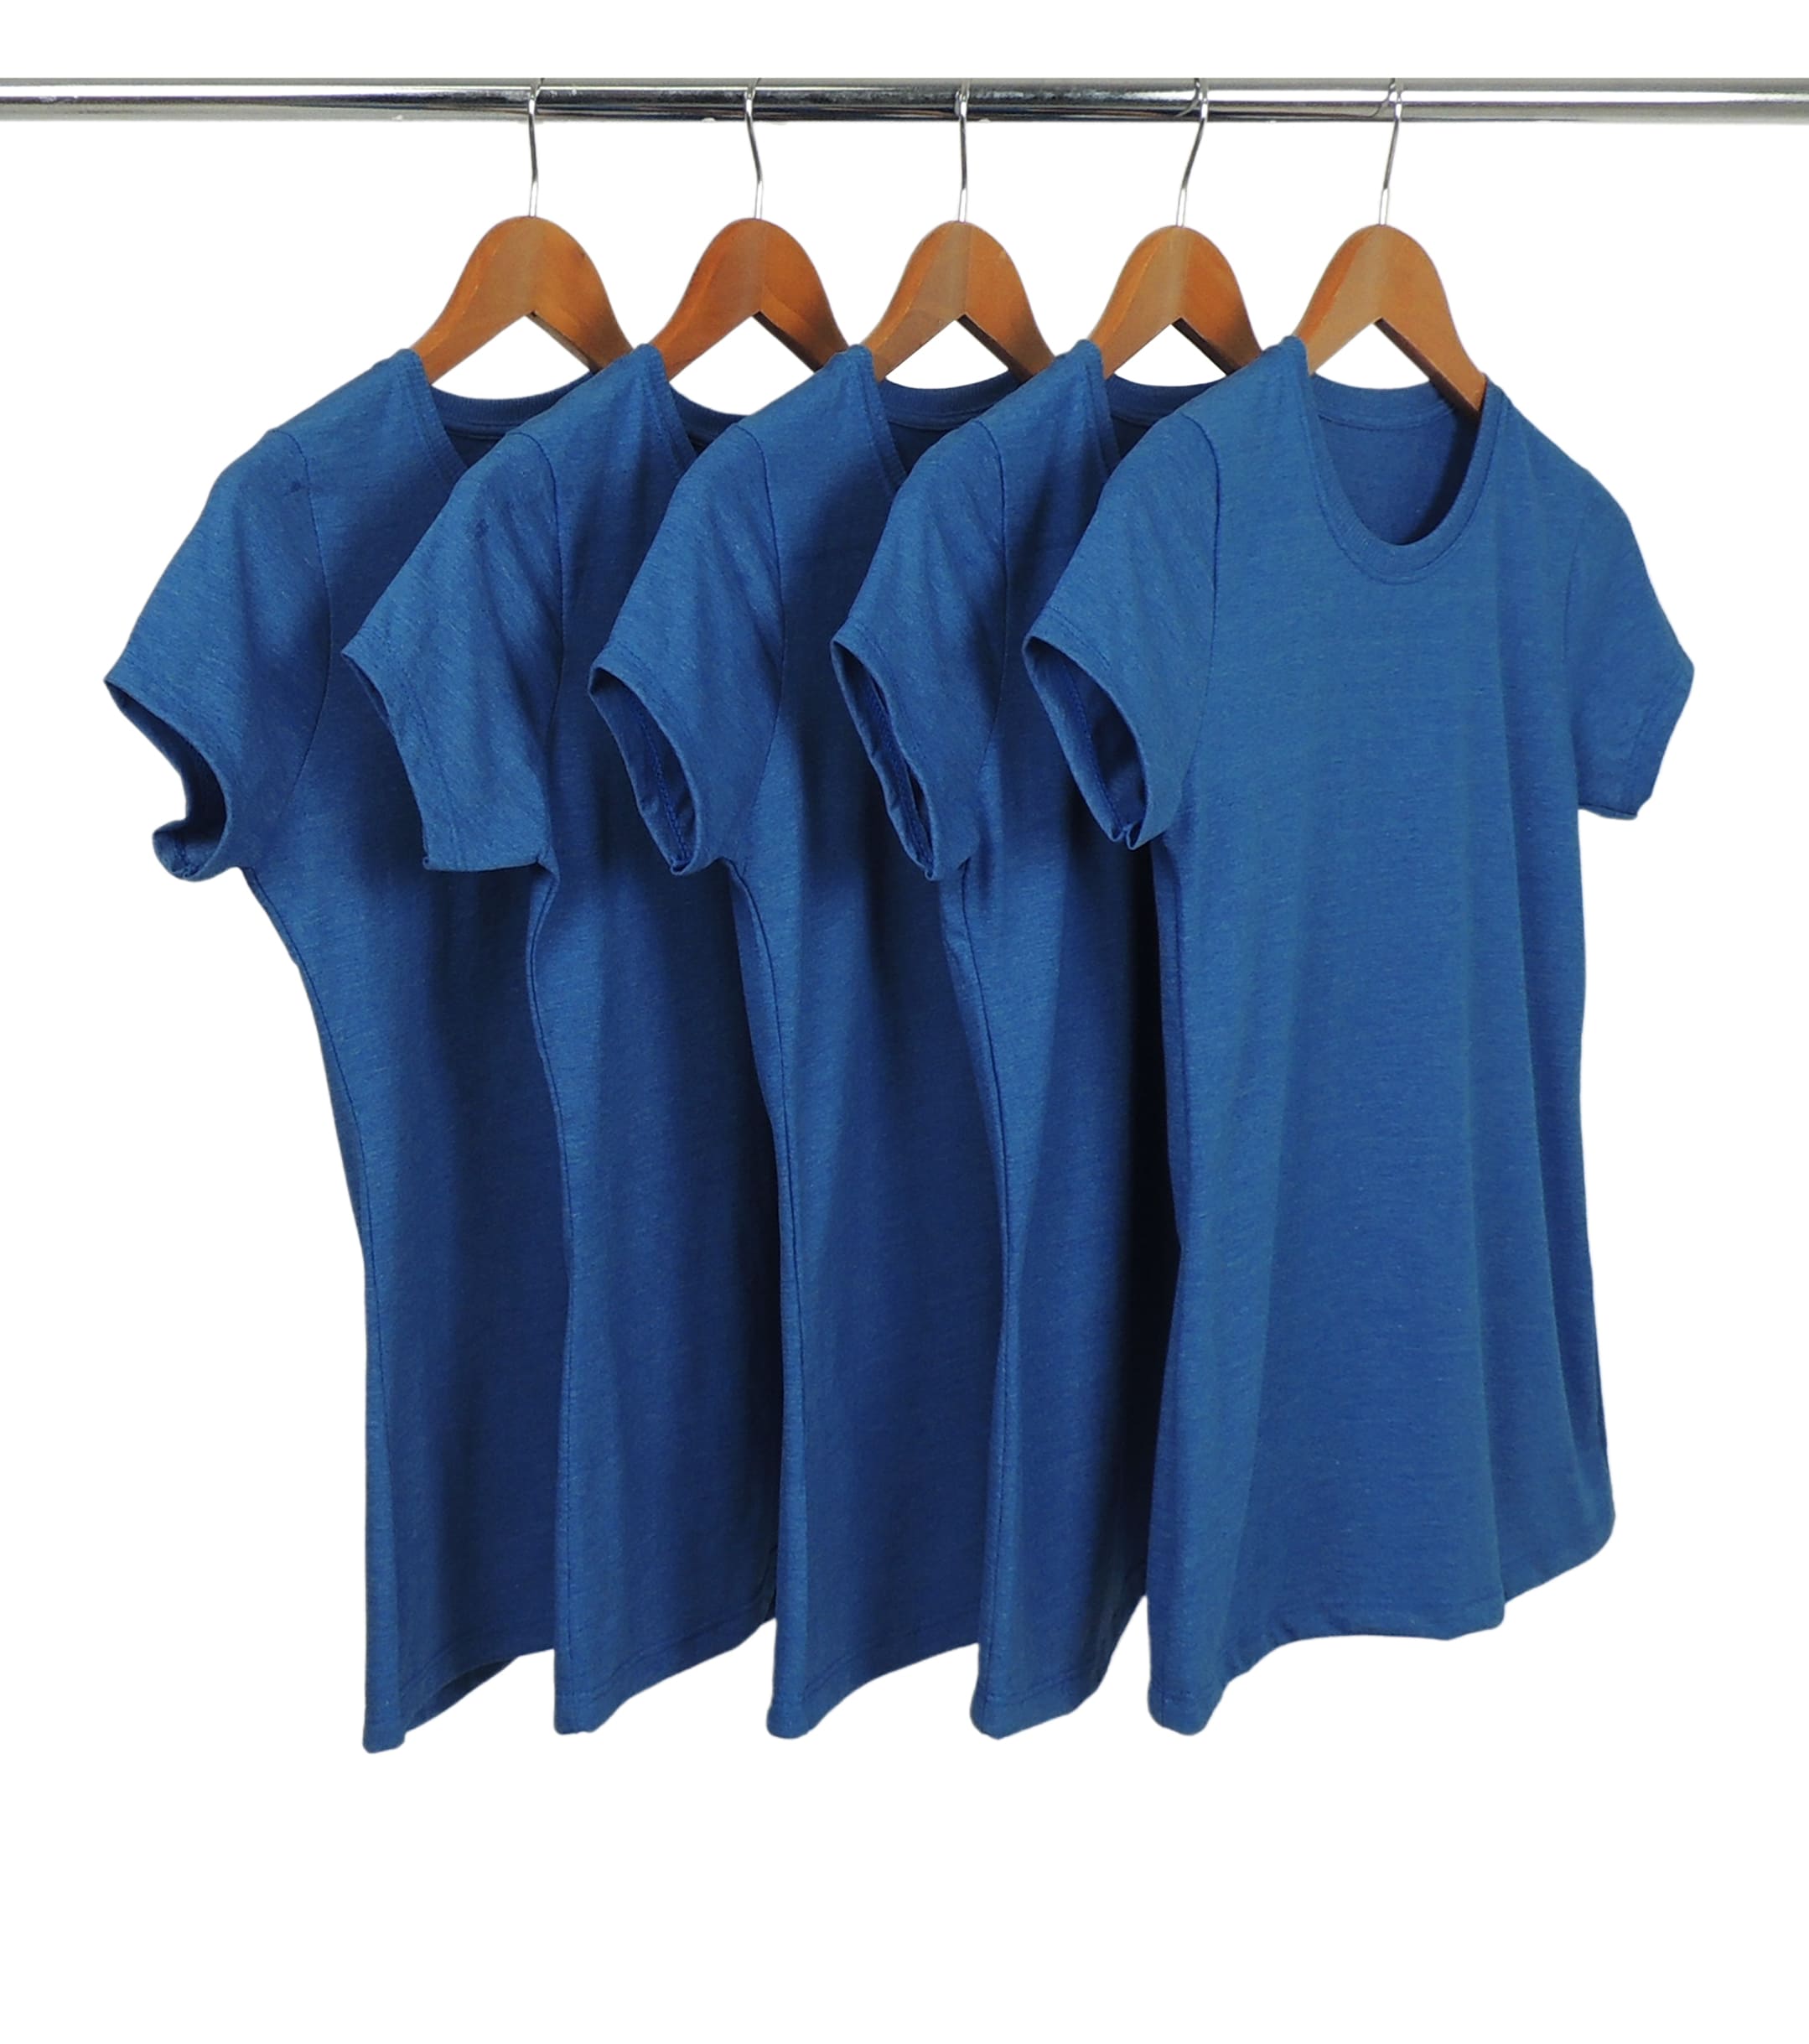 Kit 5 Camiseta Feminina Comfort Mescla Azul Royal